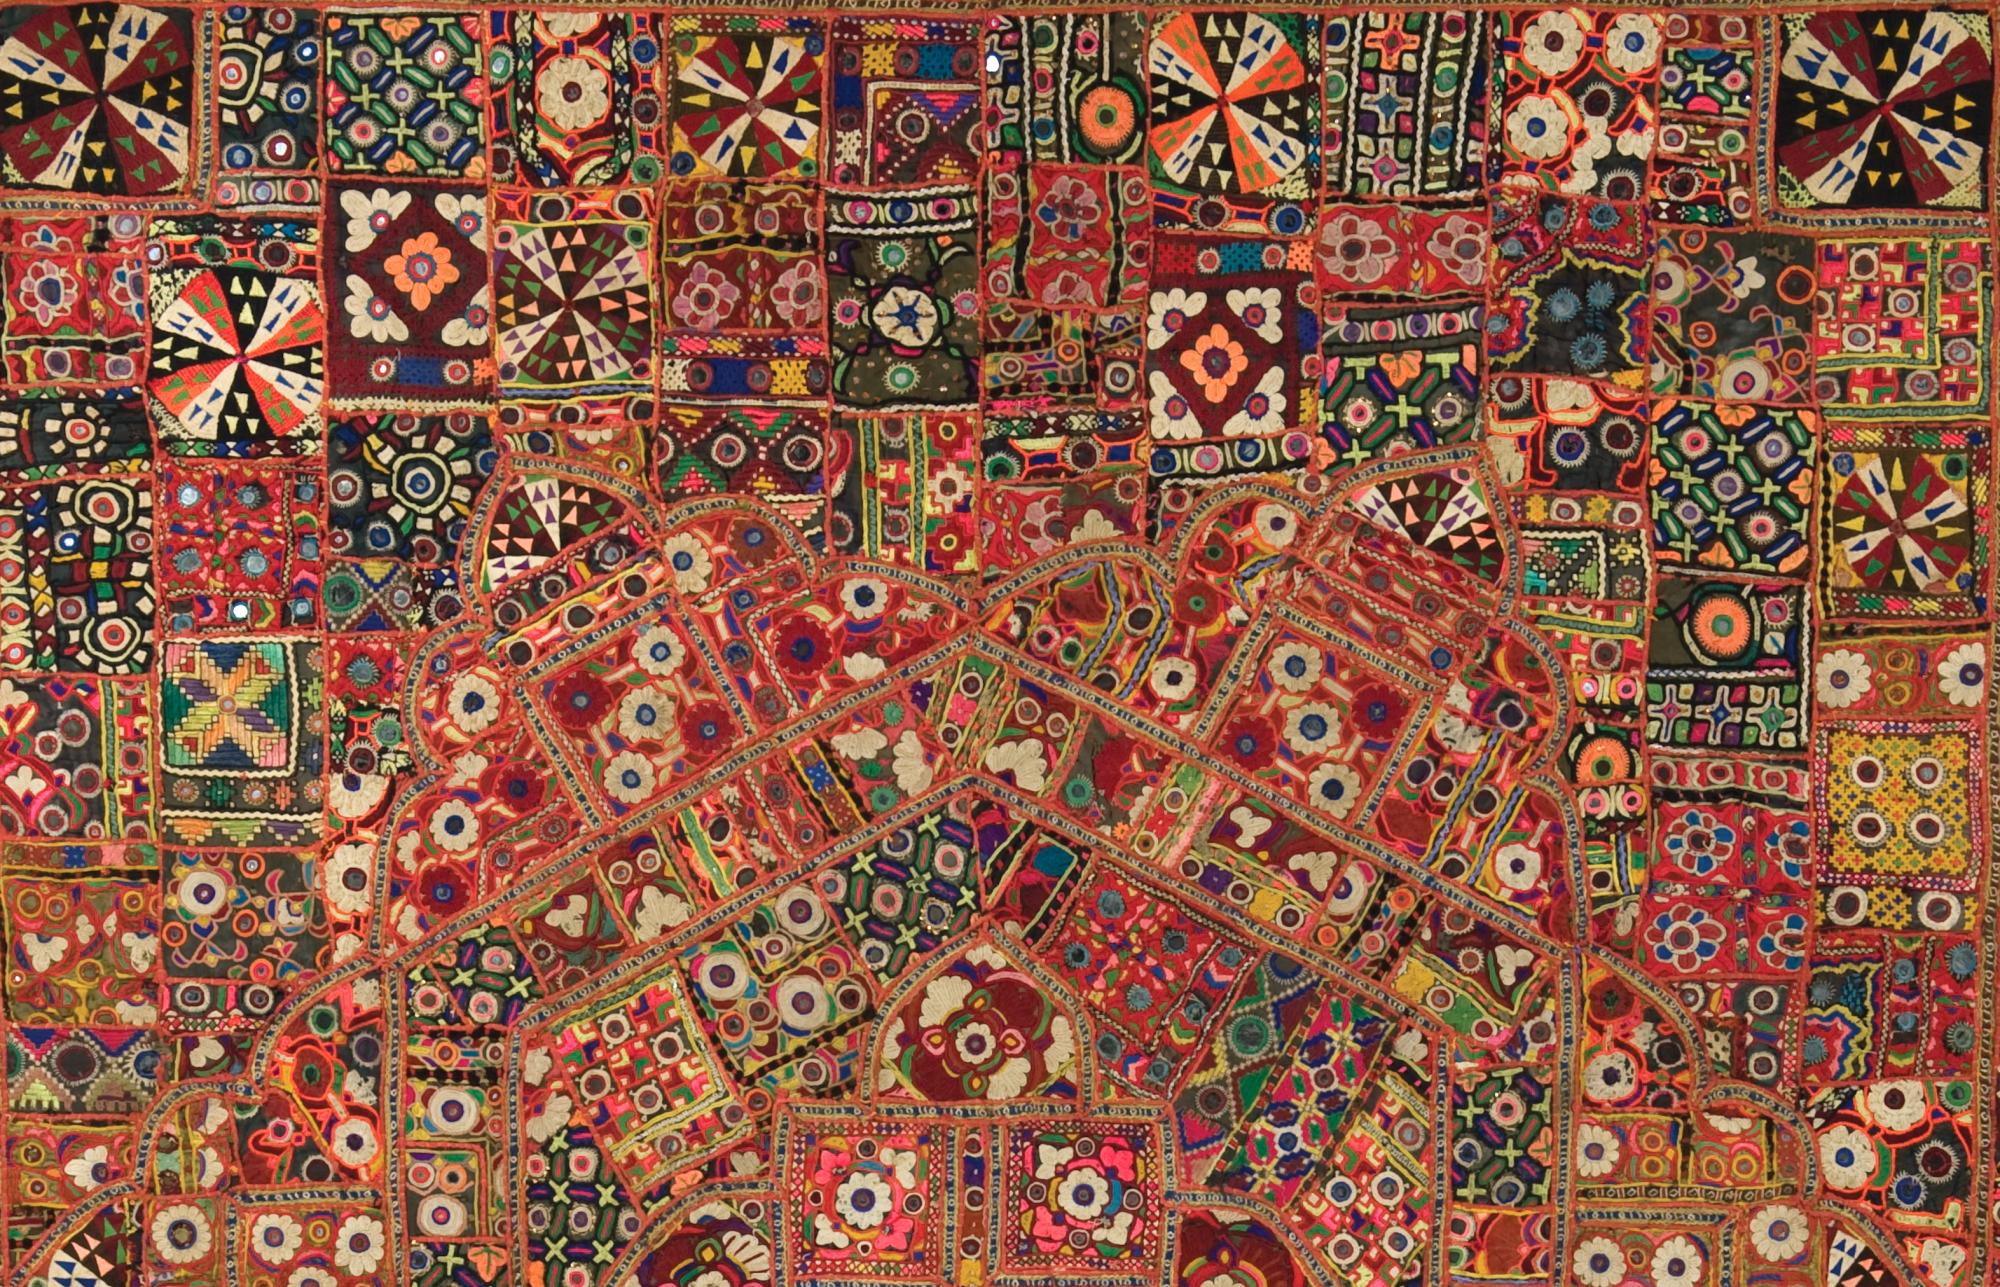 South Asian Seams: Quilts from India, Pakistan & Bangladesh 